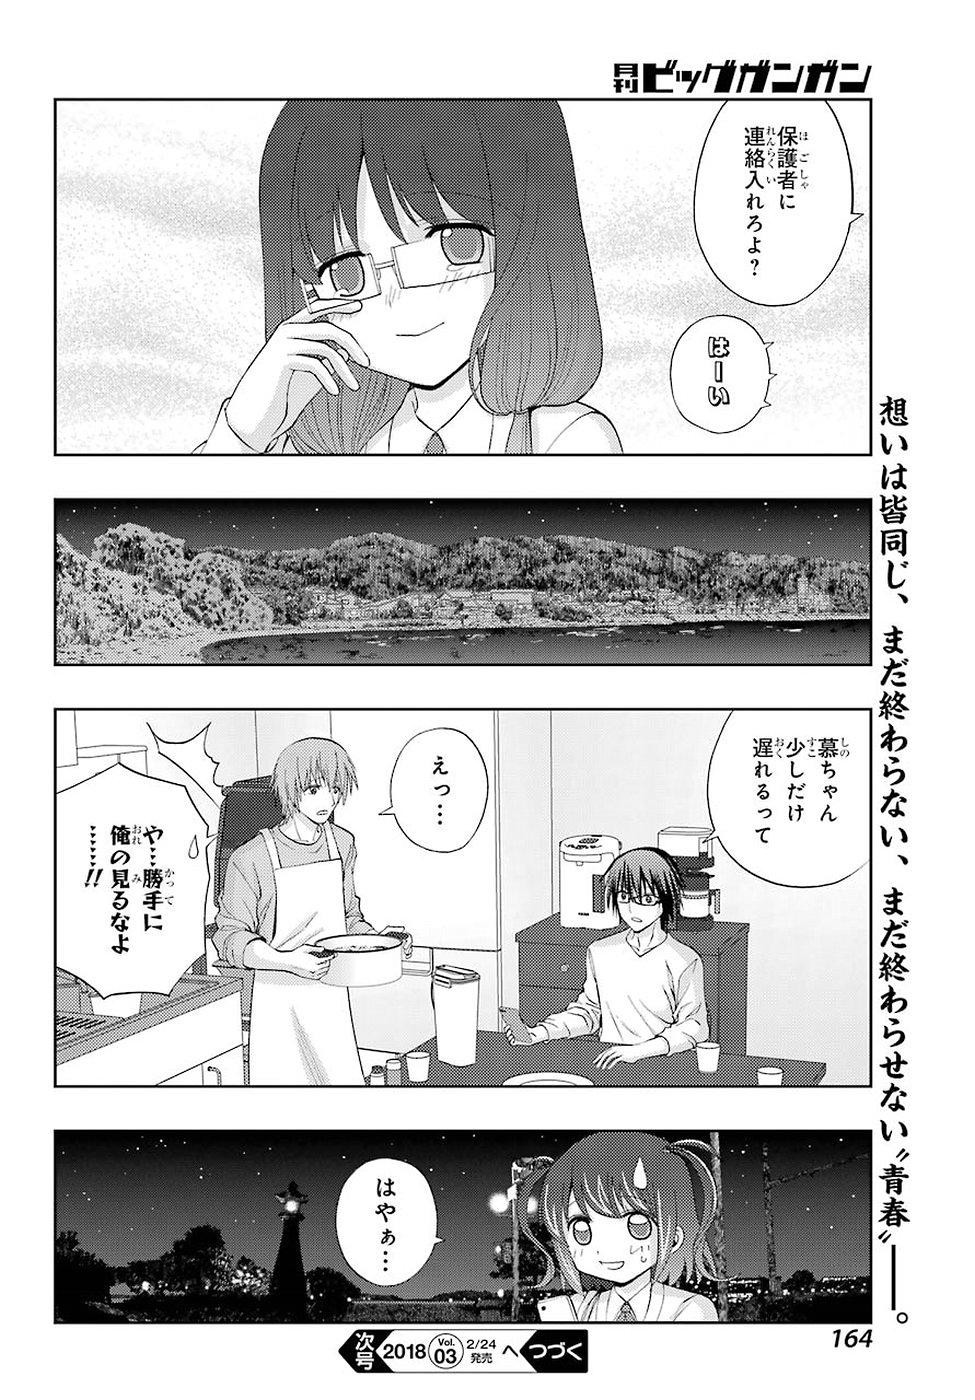 Shinohayu - The Dawn of Age Manga - Chapter 053 - Page 20